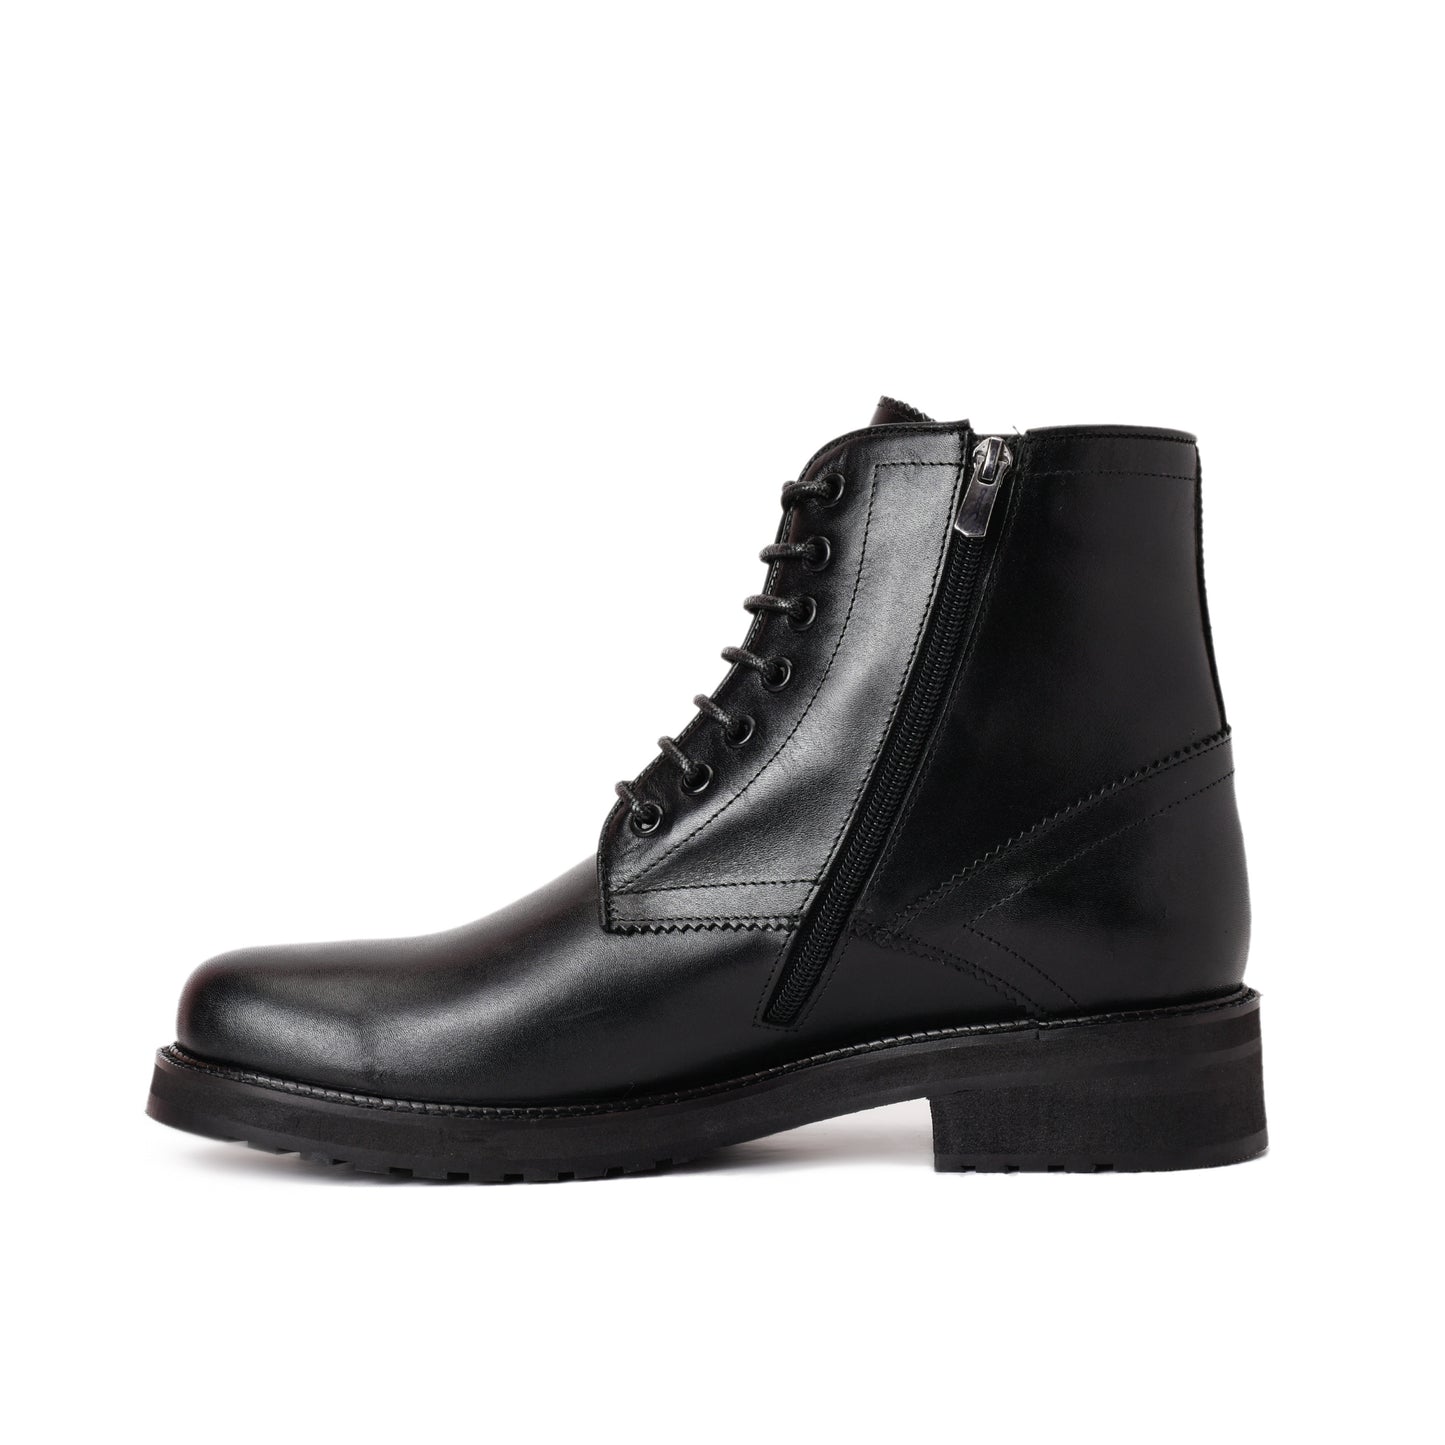 Men black boots -7010